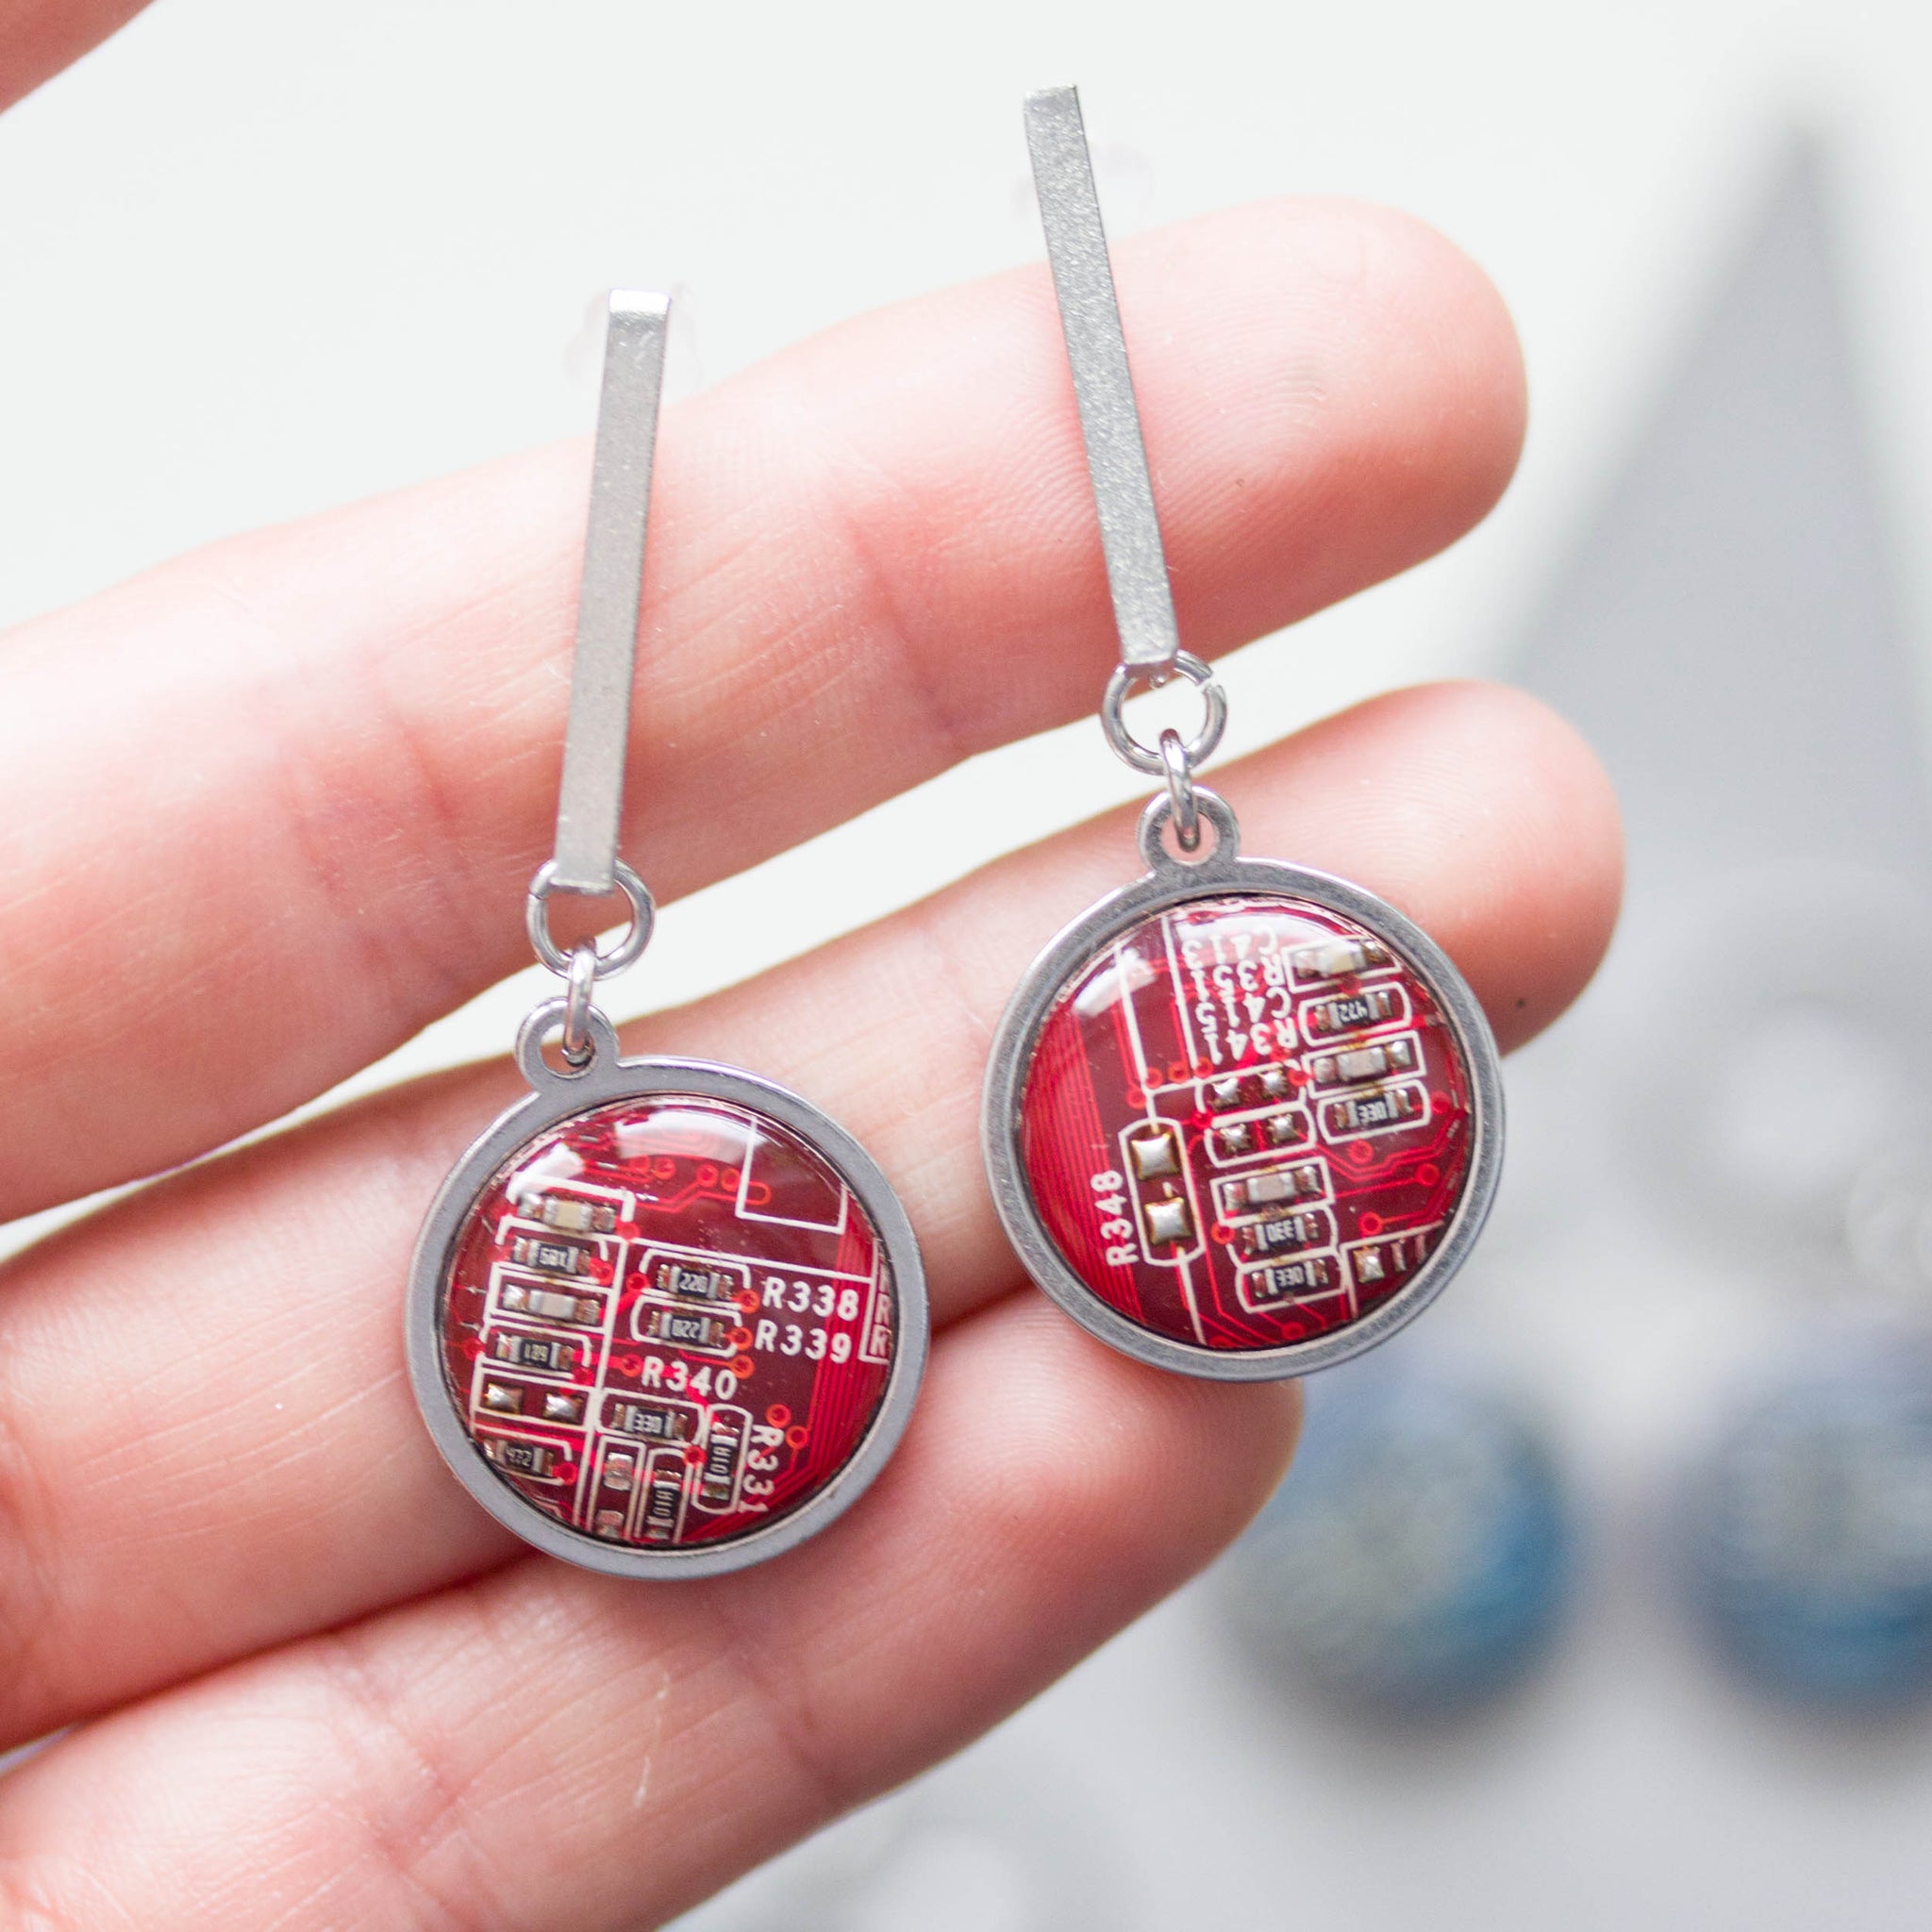 Stud earrings with 15mm round circuit board pendants, steel wires